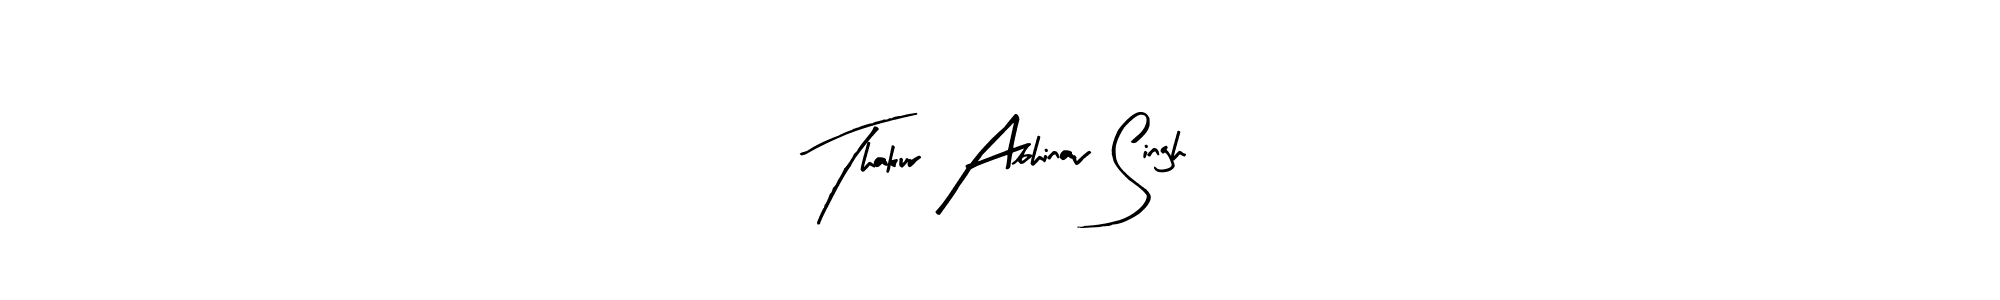 How to Draw Thakur Abhinav Singh signature style? Arty Signature is a latest design signature styles for name Thakur Abhinav Singh. Thakur Abhinav Singh signature style 8 images and pictures png